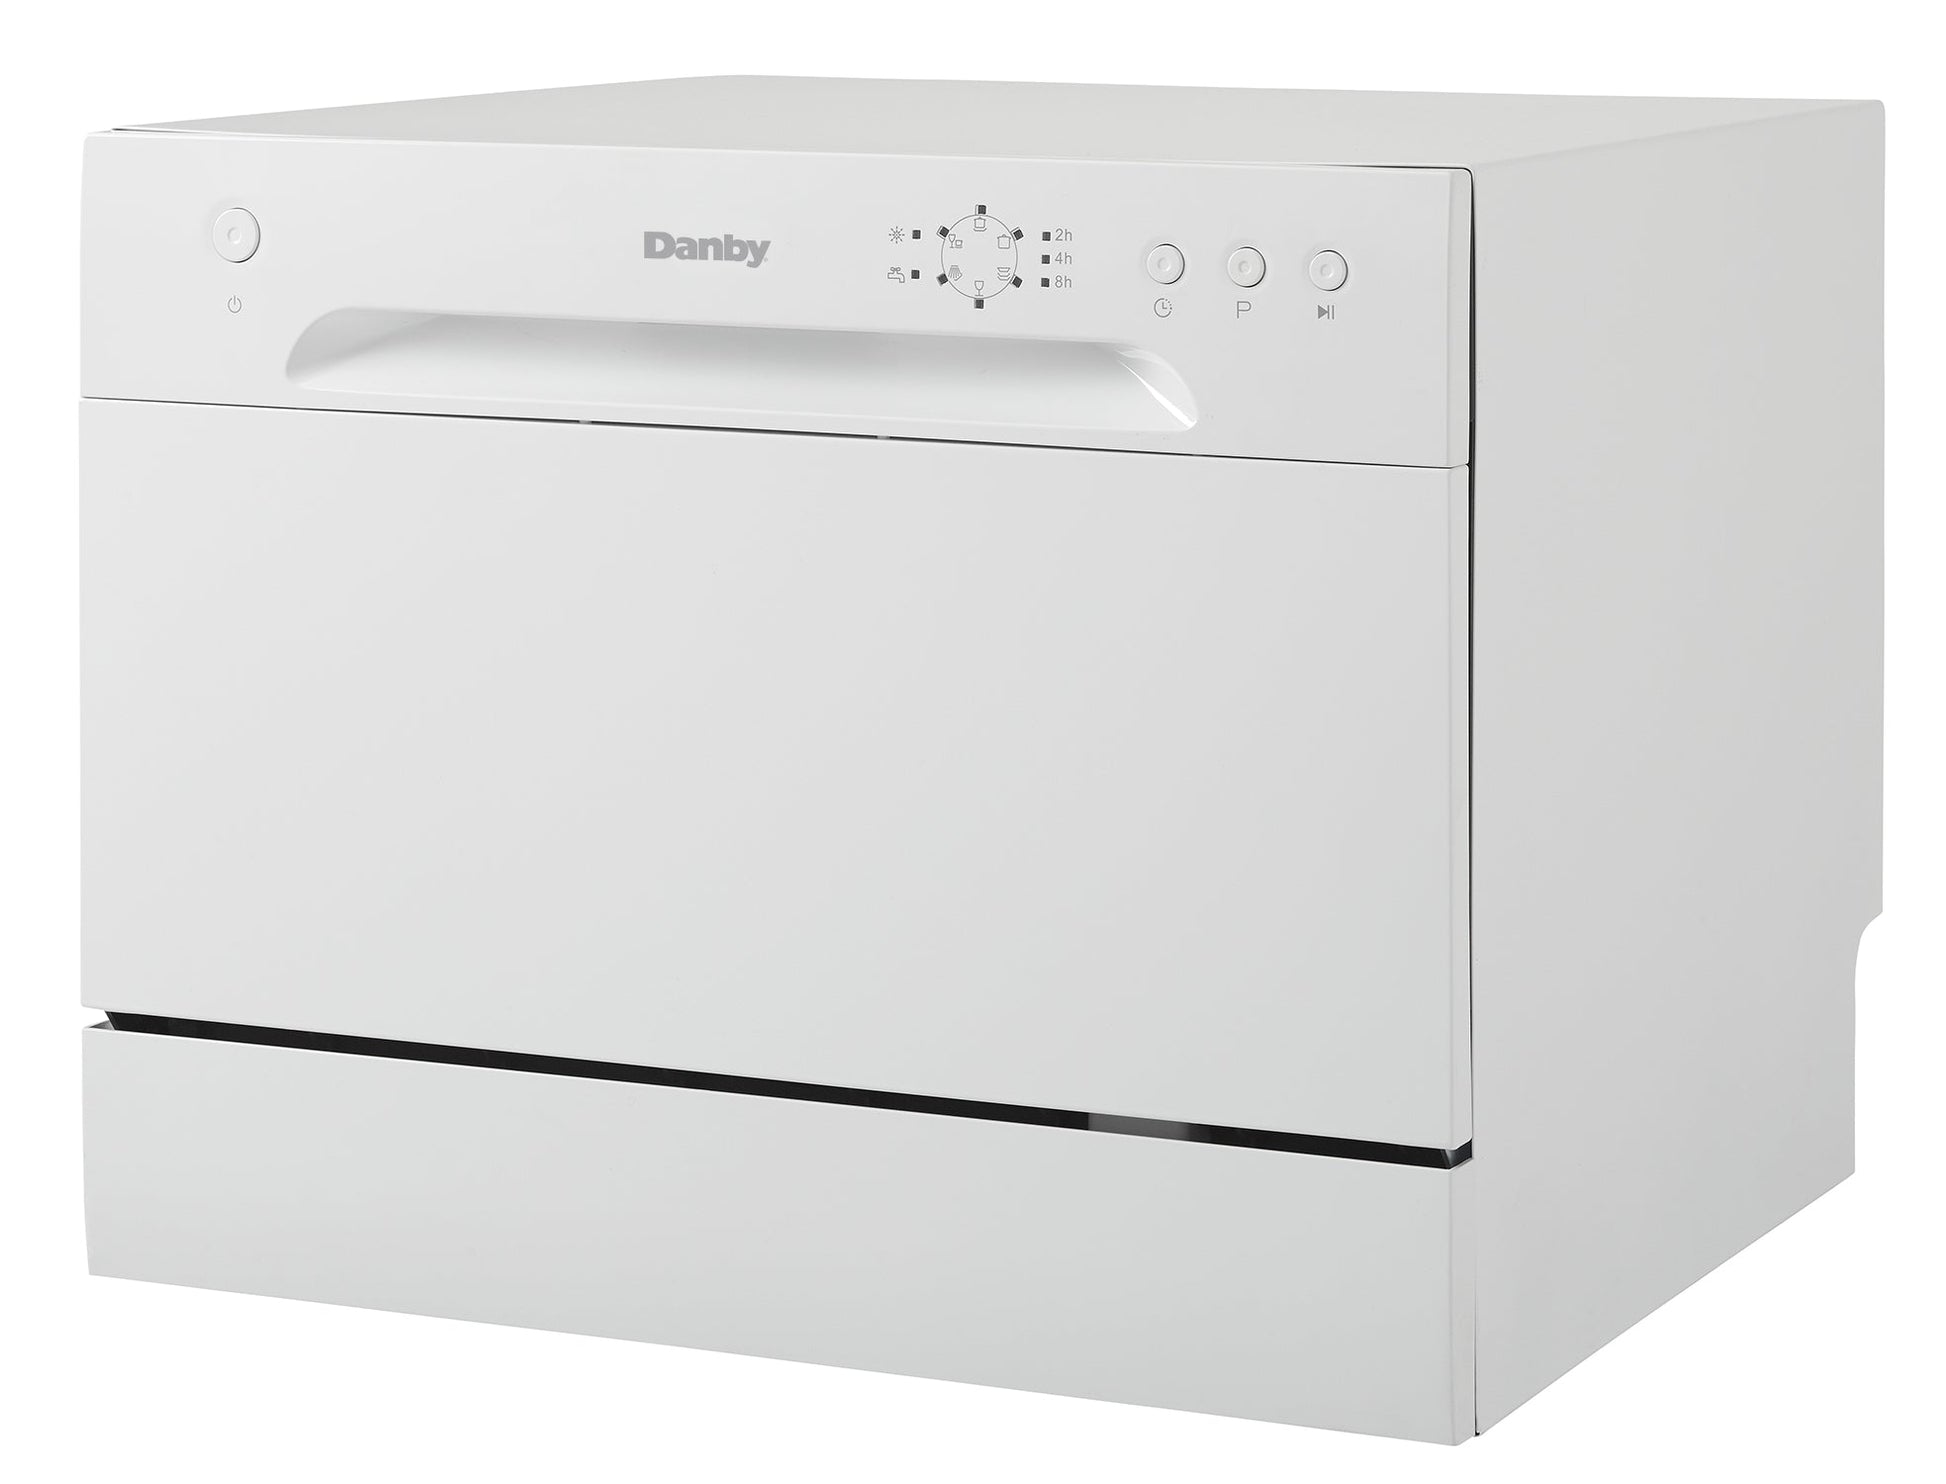 Moosoo Countertop Dishwasher, Mini Portable Dishwasher, Dishwasher with  Water Tank - MX20, White 